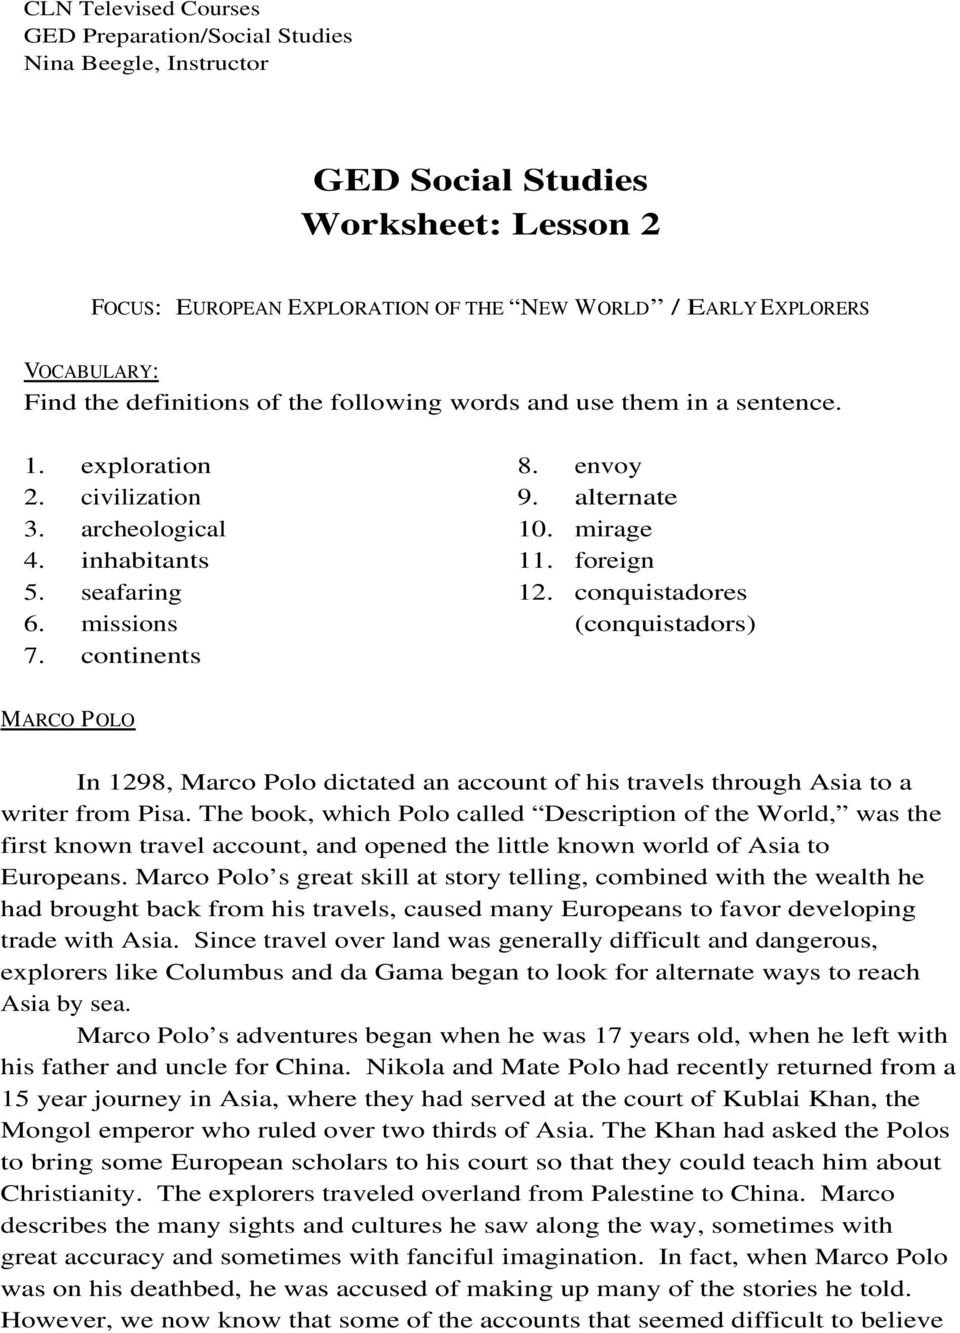 Ged Social Studies Worksheet Lesson 2  Pdf Throughout Free Ged Social Studies Worksheets